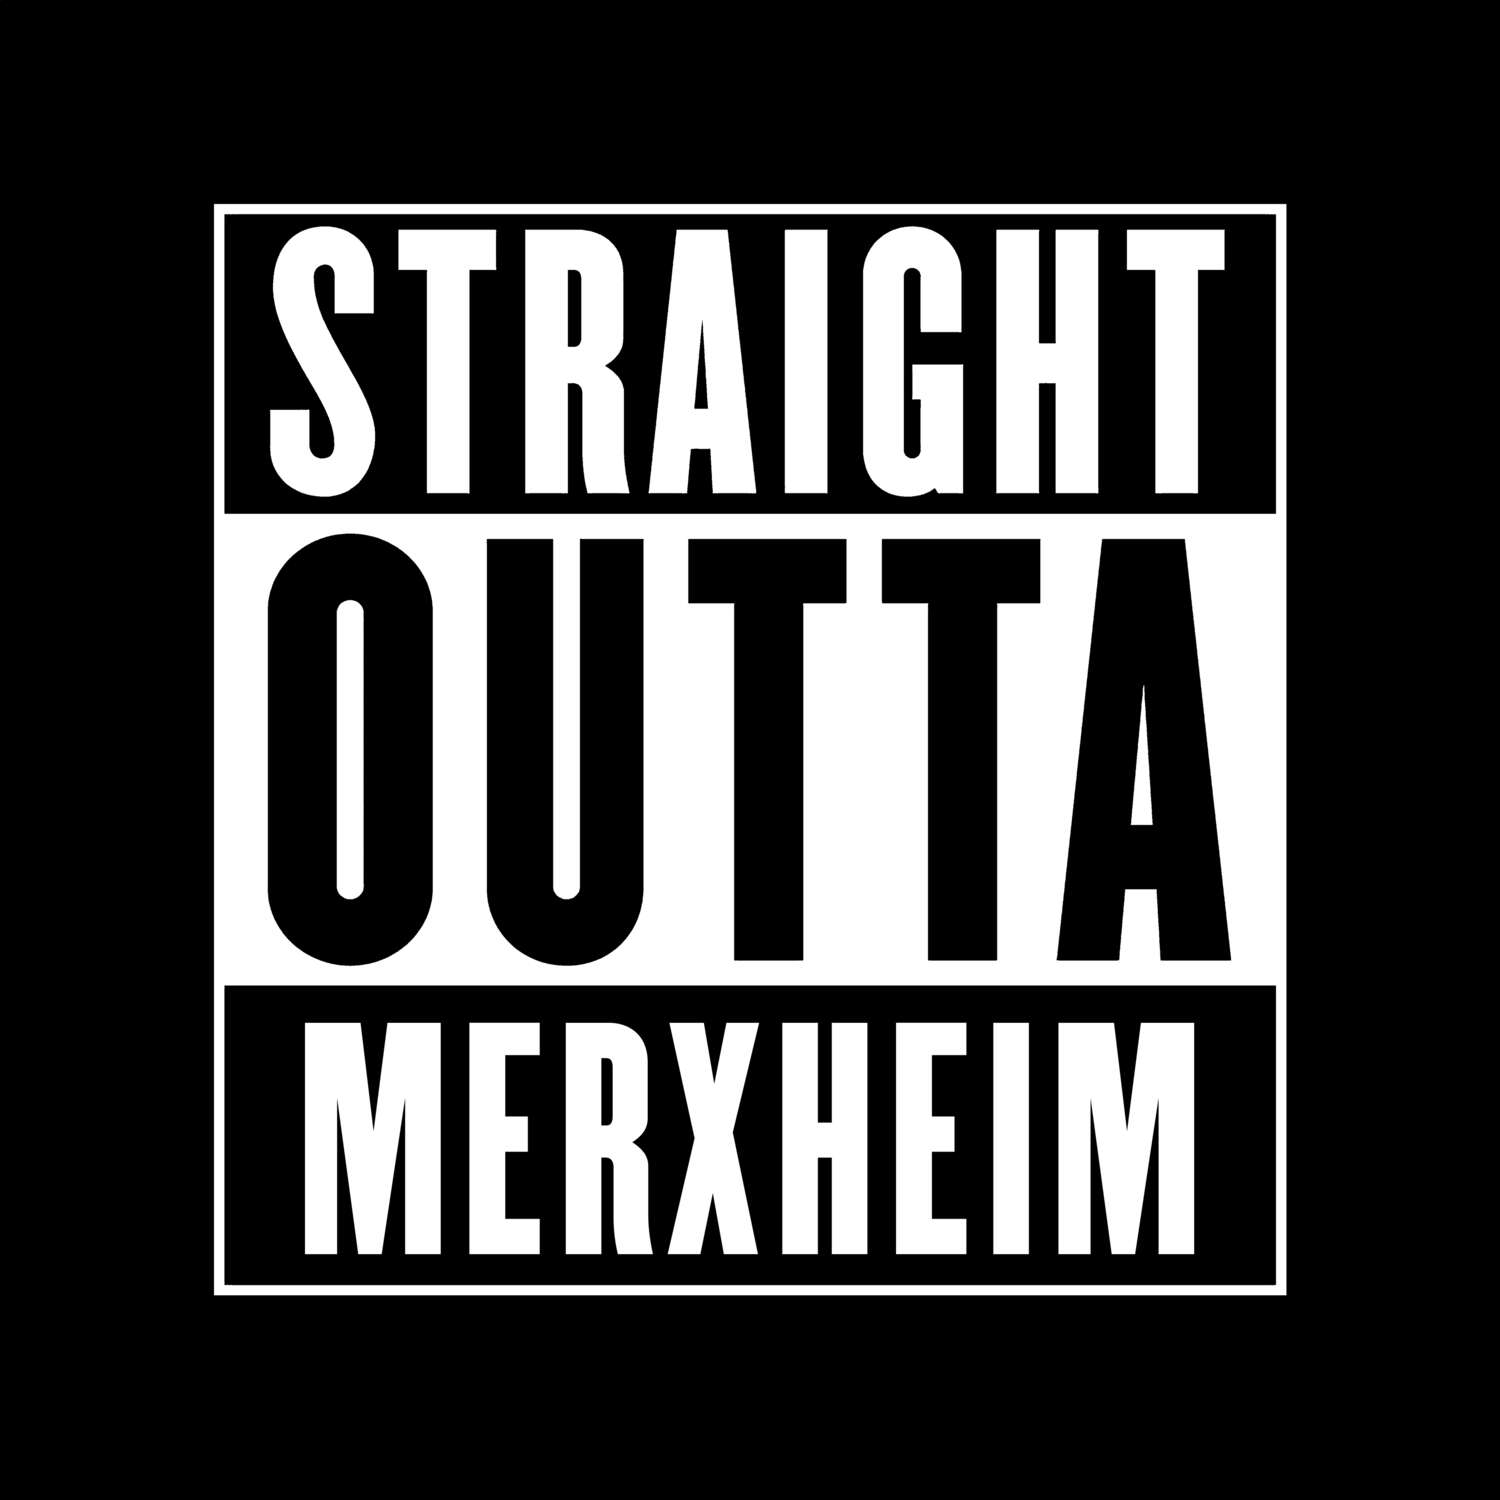 Merxheim T-Shirt »Straight Outta«